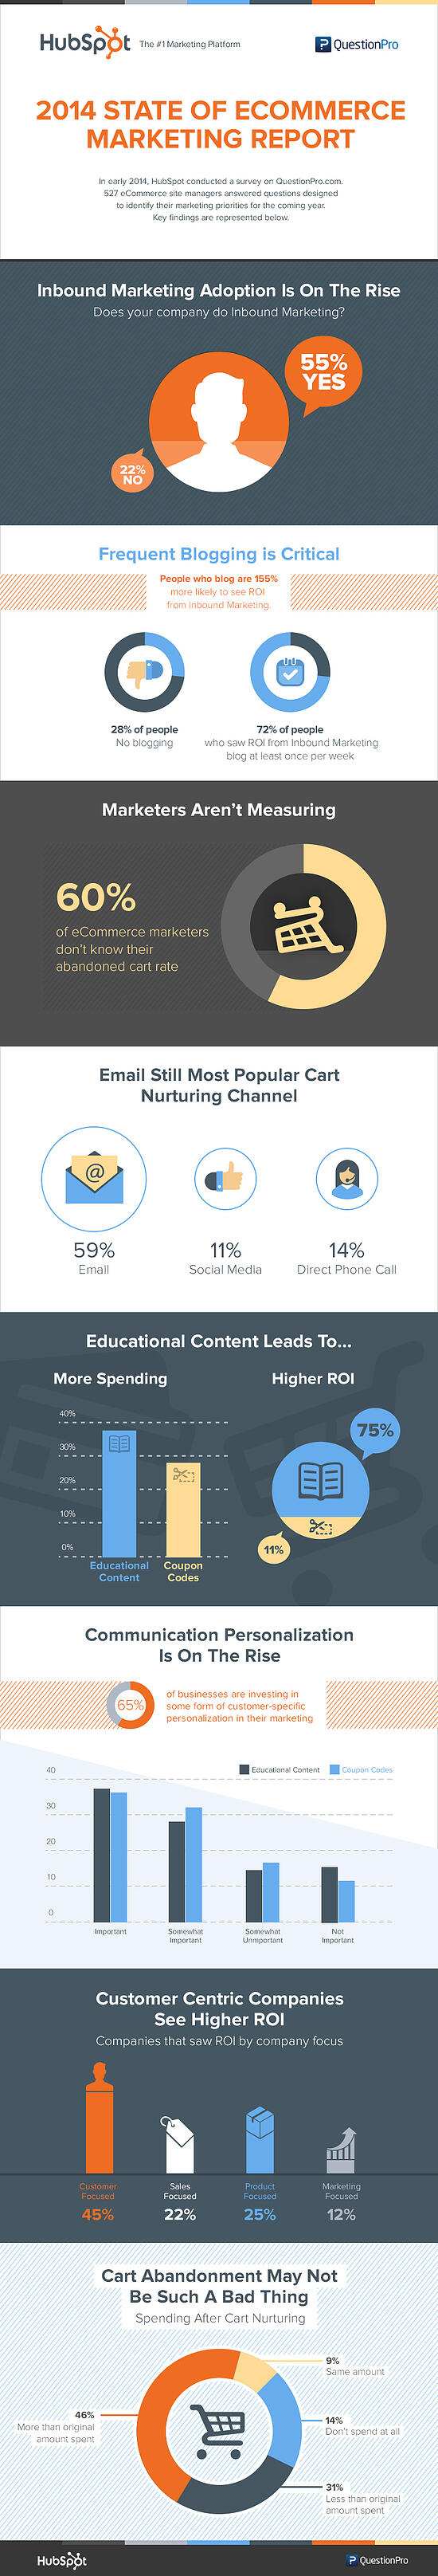 hubspot-ecommerce-marketing-infographic_(1)